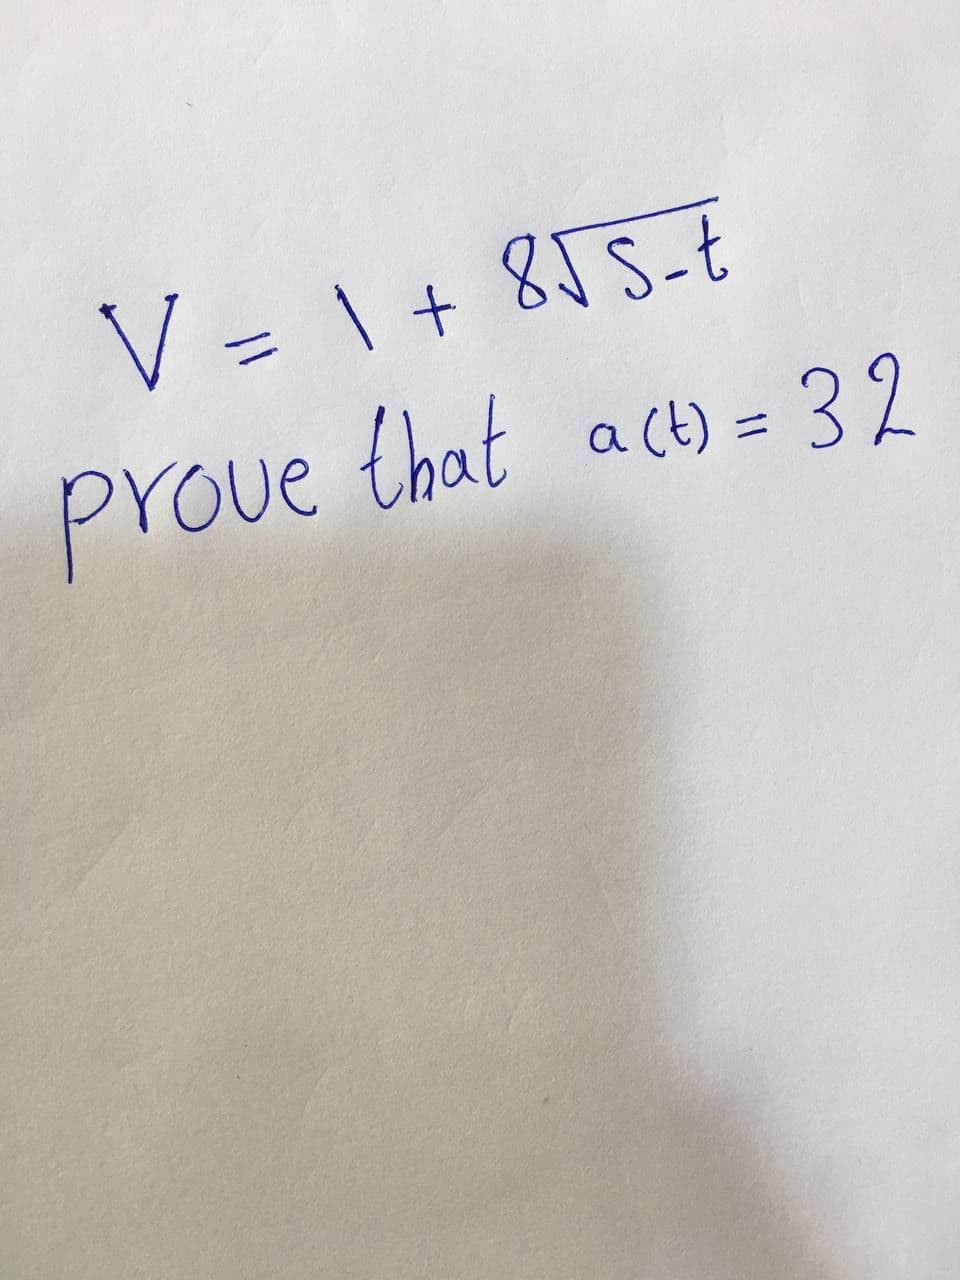 V = \ + 855-t
prove that act) = 32
.(E) 3=
